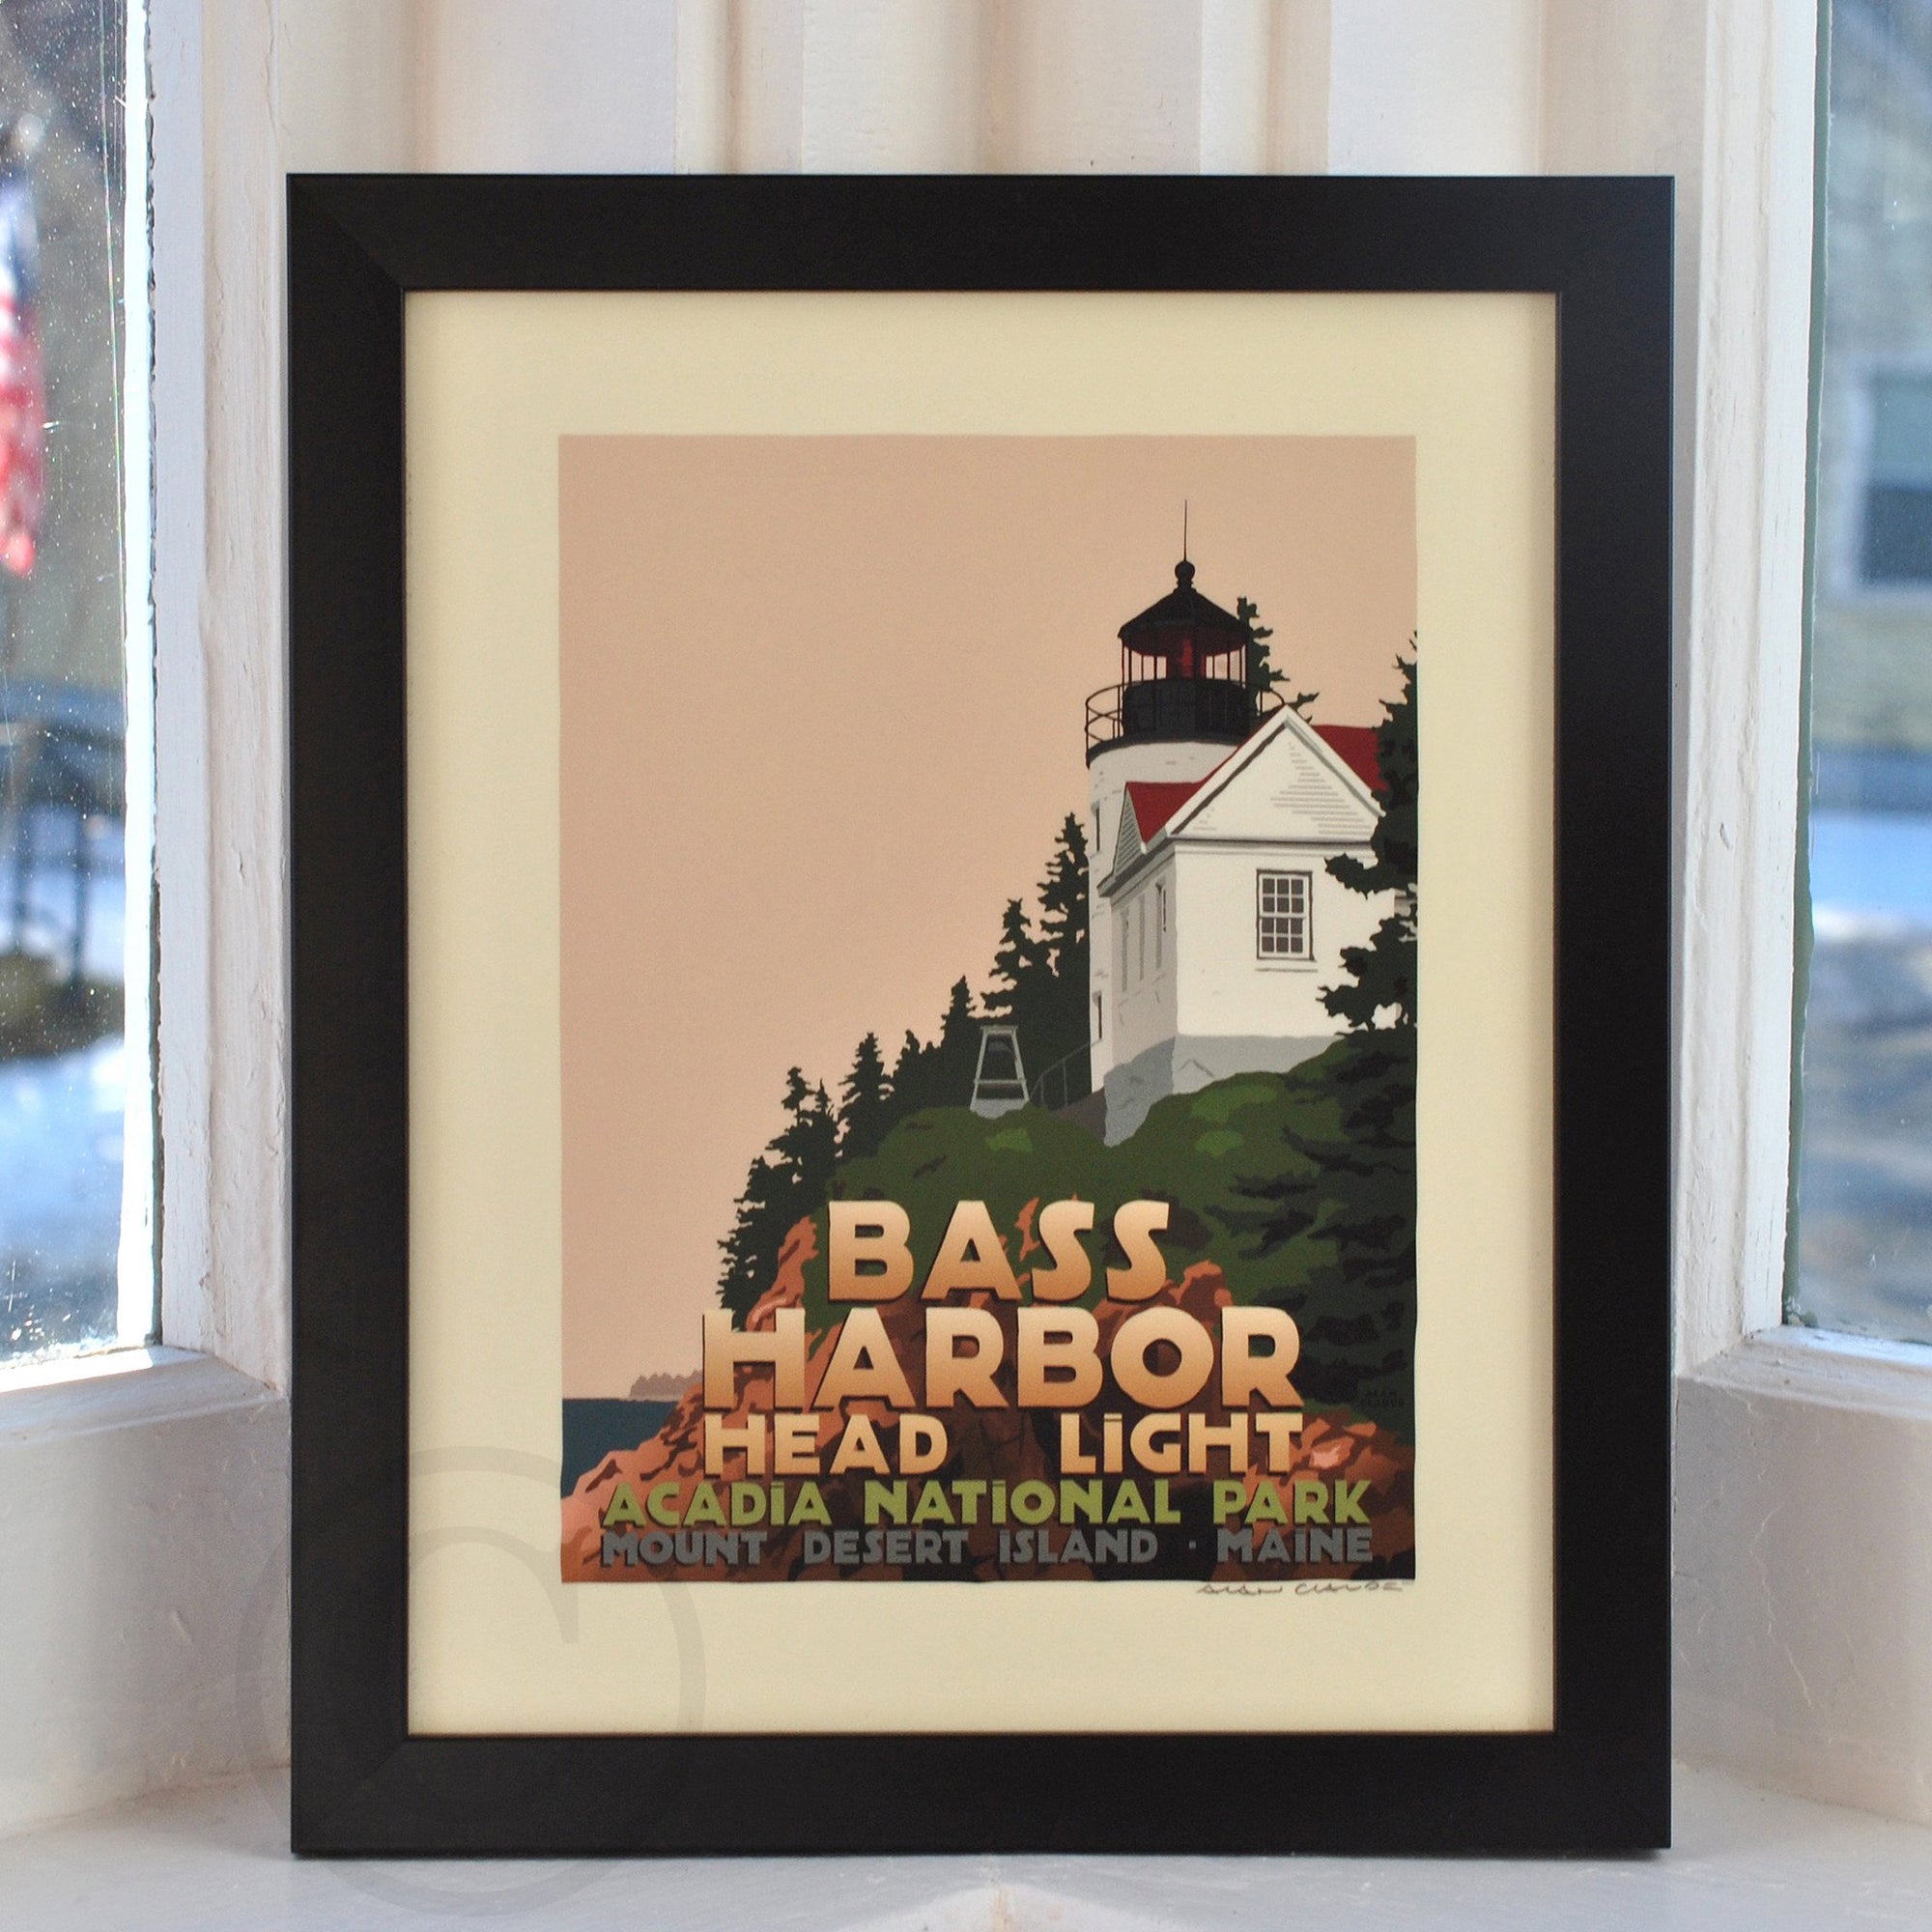 Bass Harbor Head Light Art Print 8" x 10" Framed Travel Poster By Alan Claude - Maine